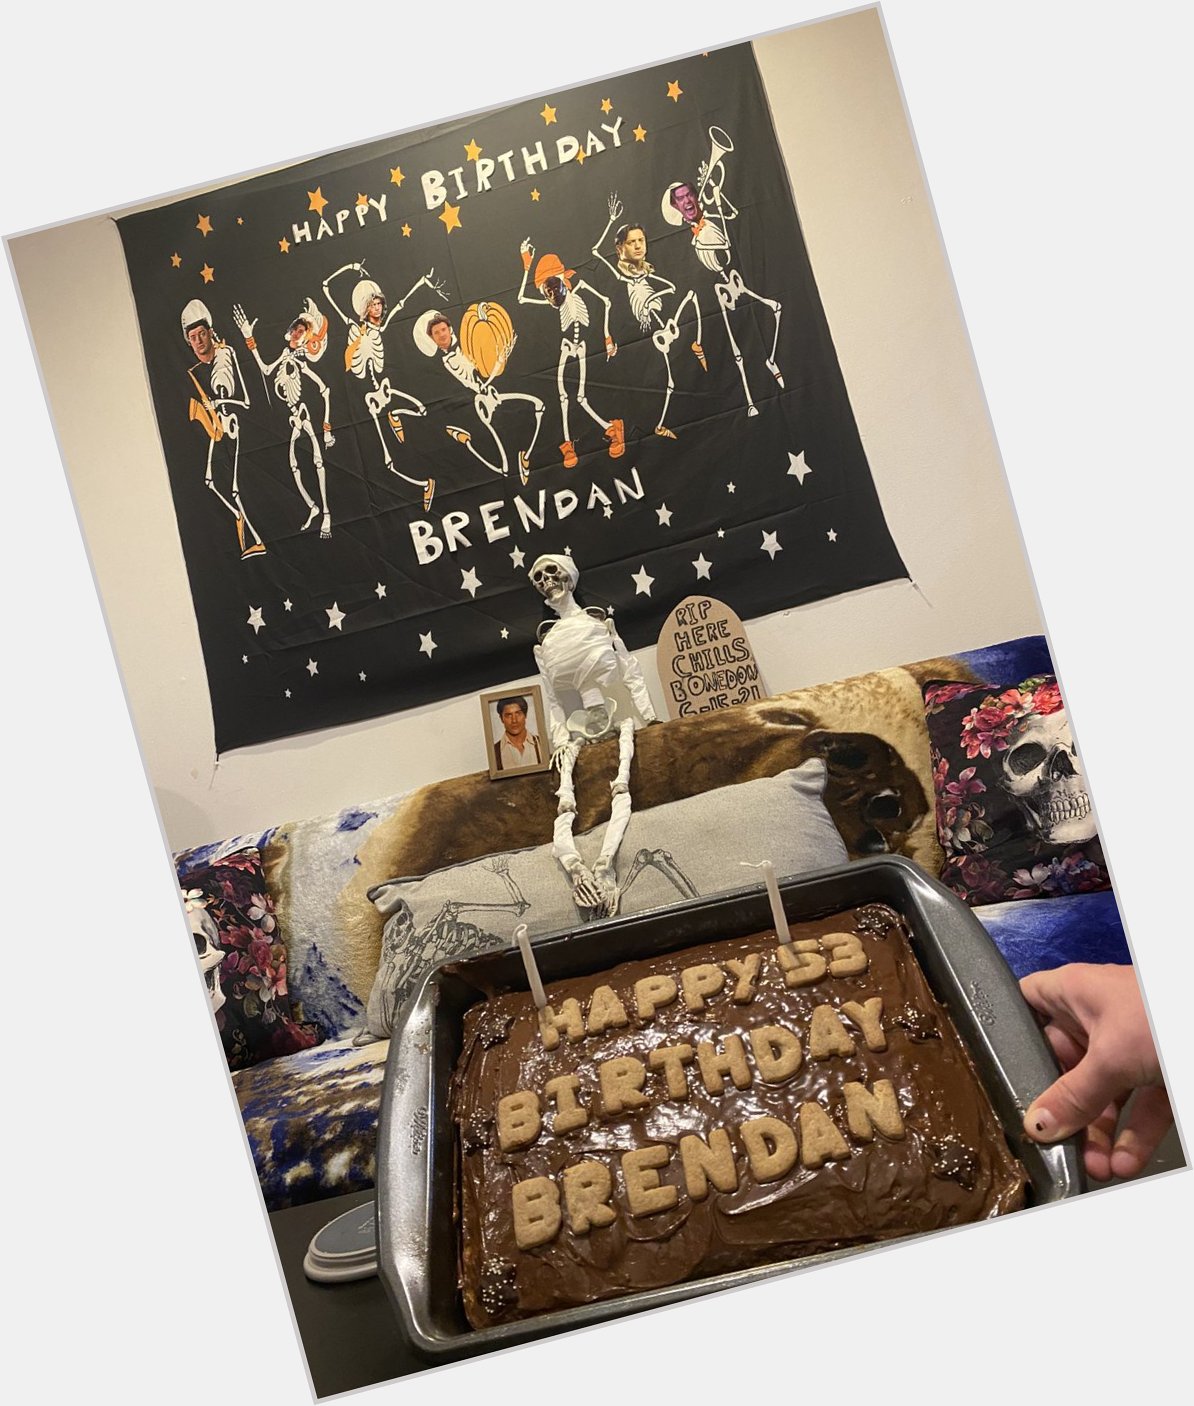 Happy Birthday to my dude Brendan Fraser 